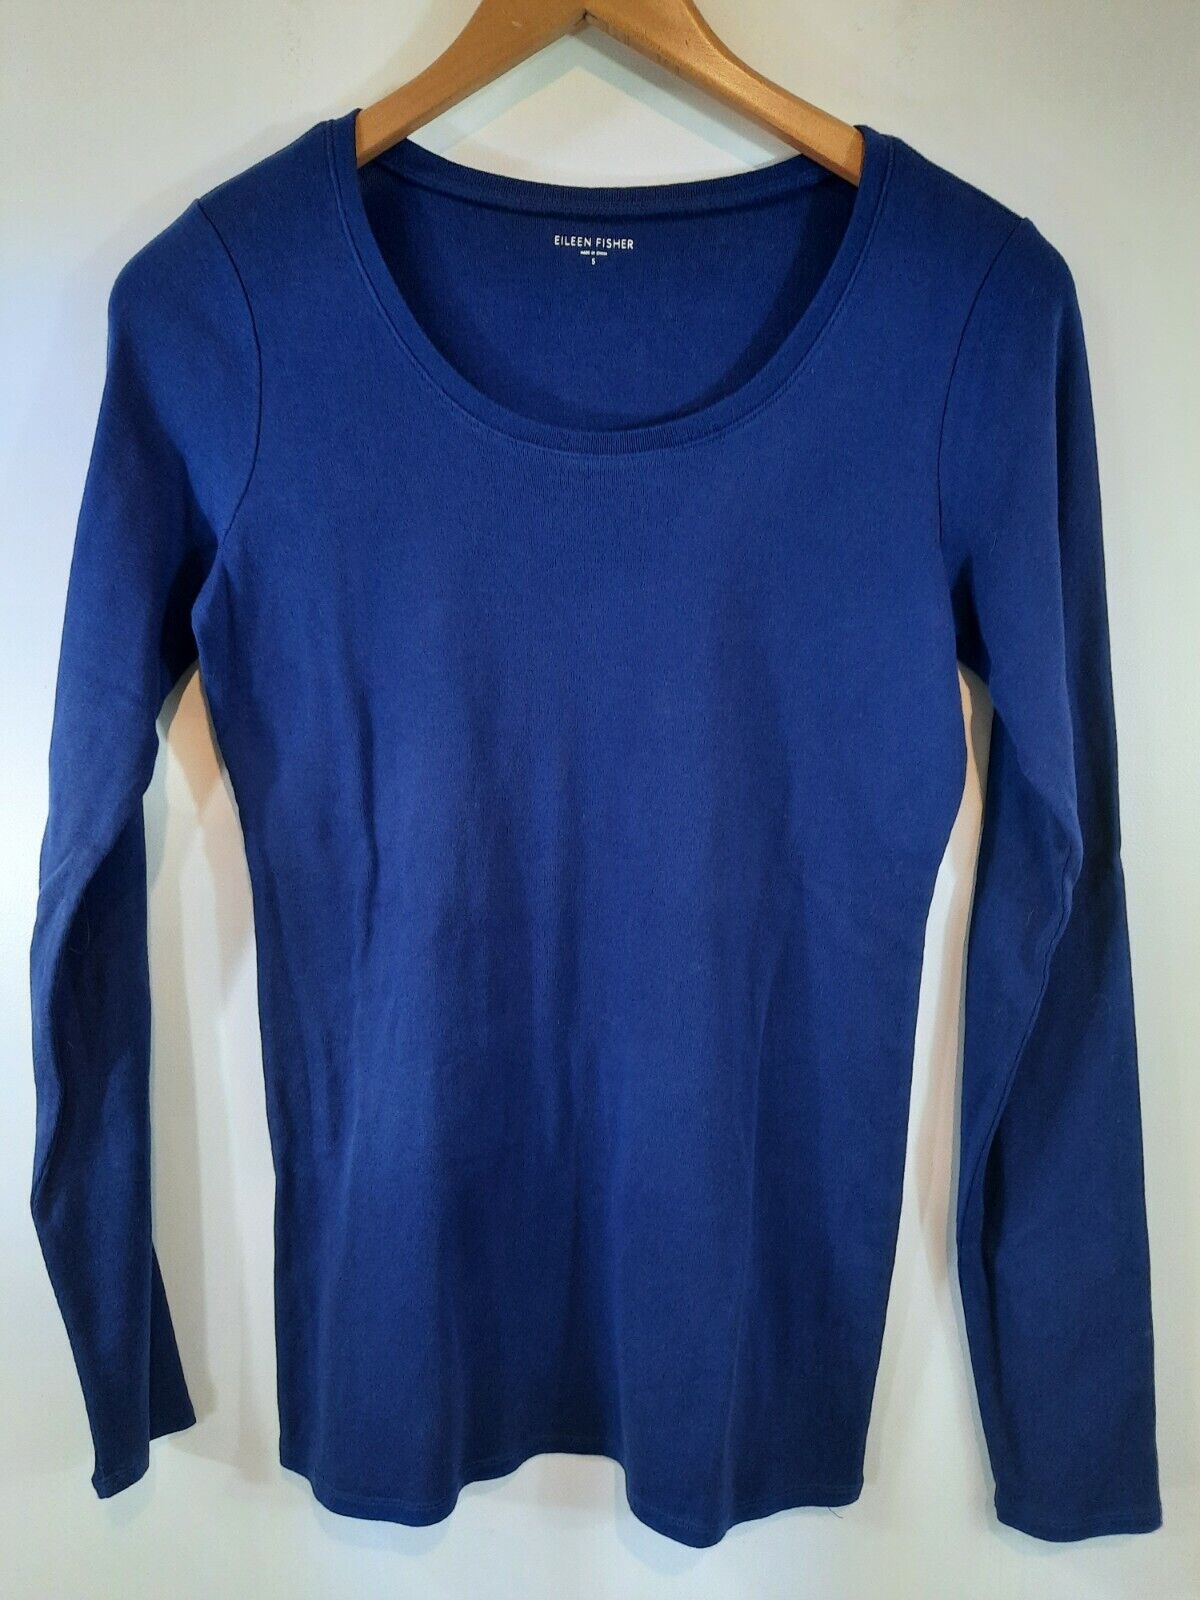 Eileen Fisher Top Small Organic Cotton Baby Rib Knit Slim Blue Long Sleeve Shirt